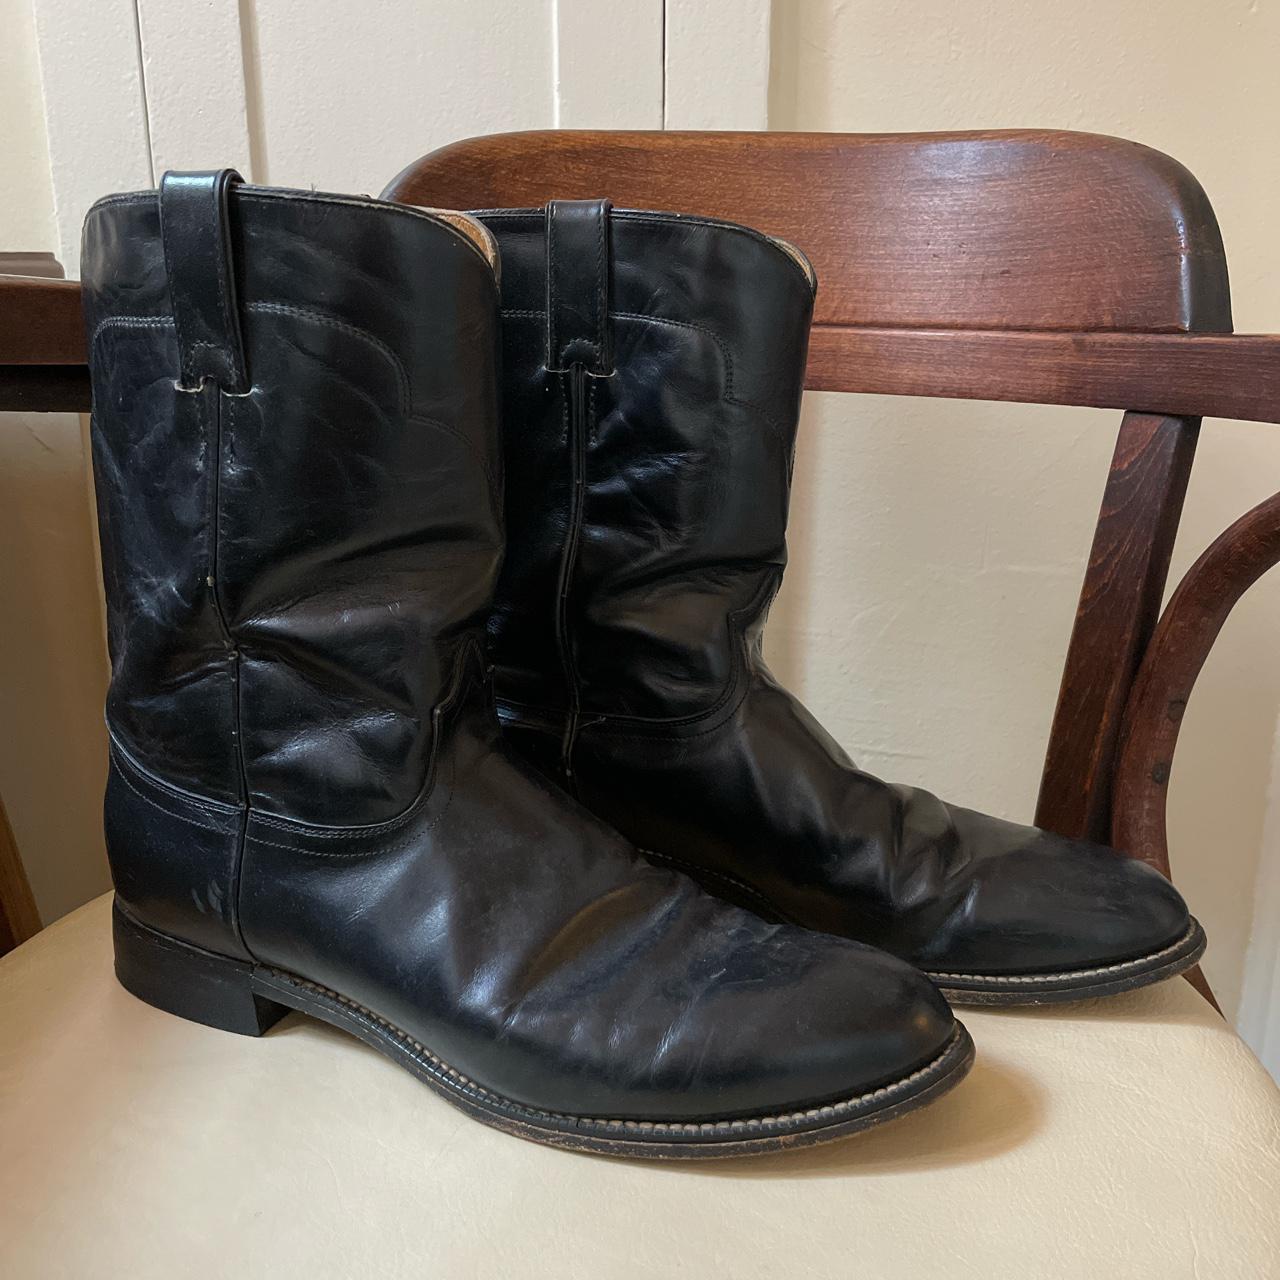 Tony Lama cowboy boots Ropers / Black leather... - Depop